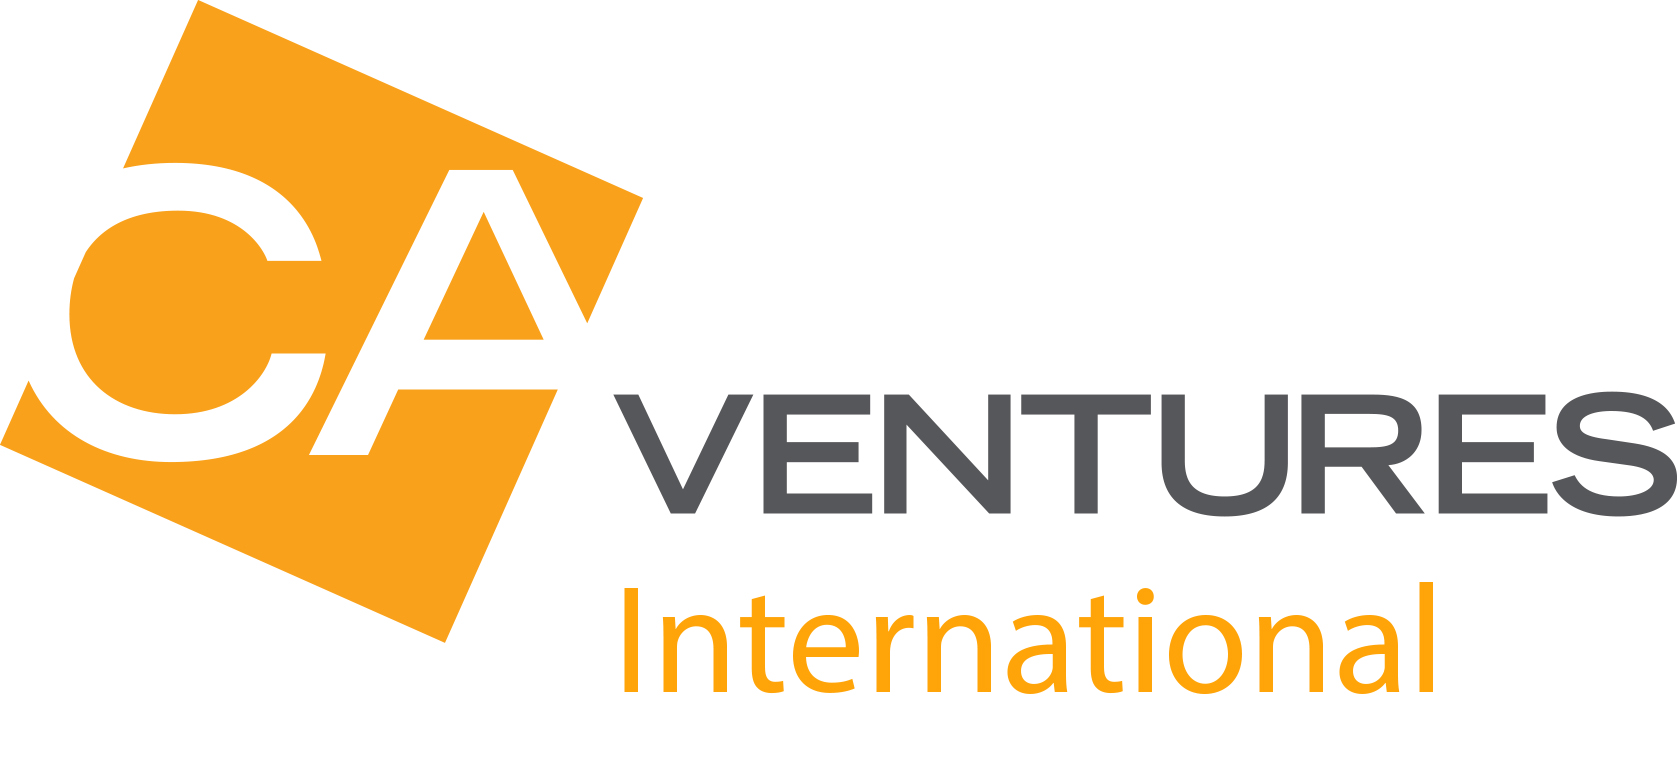 CA Ventures International